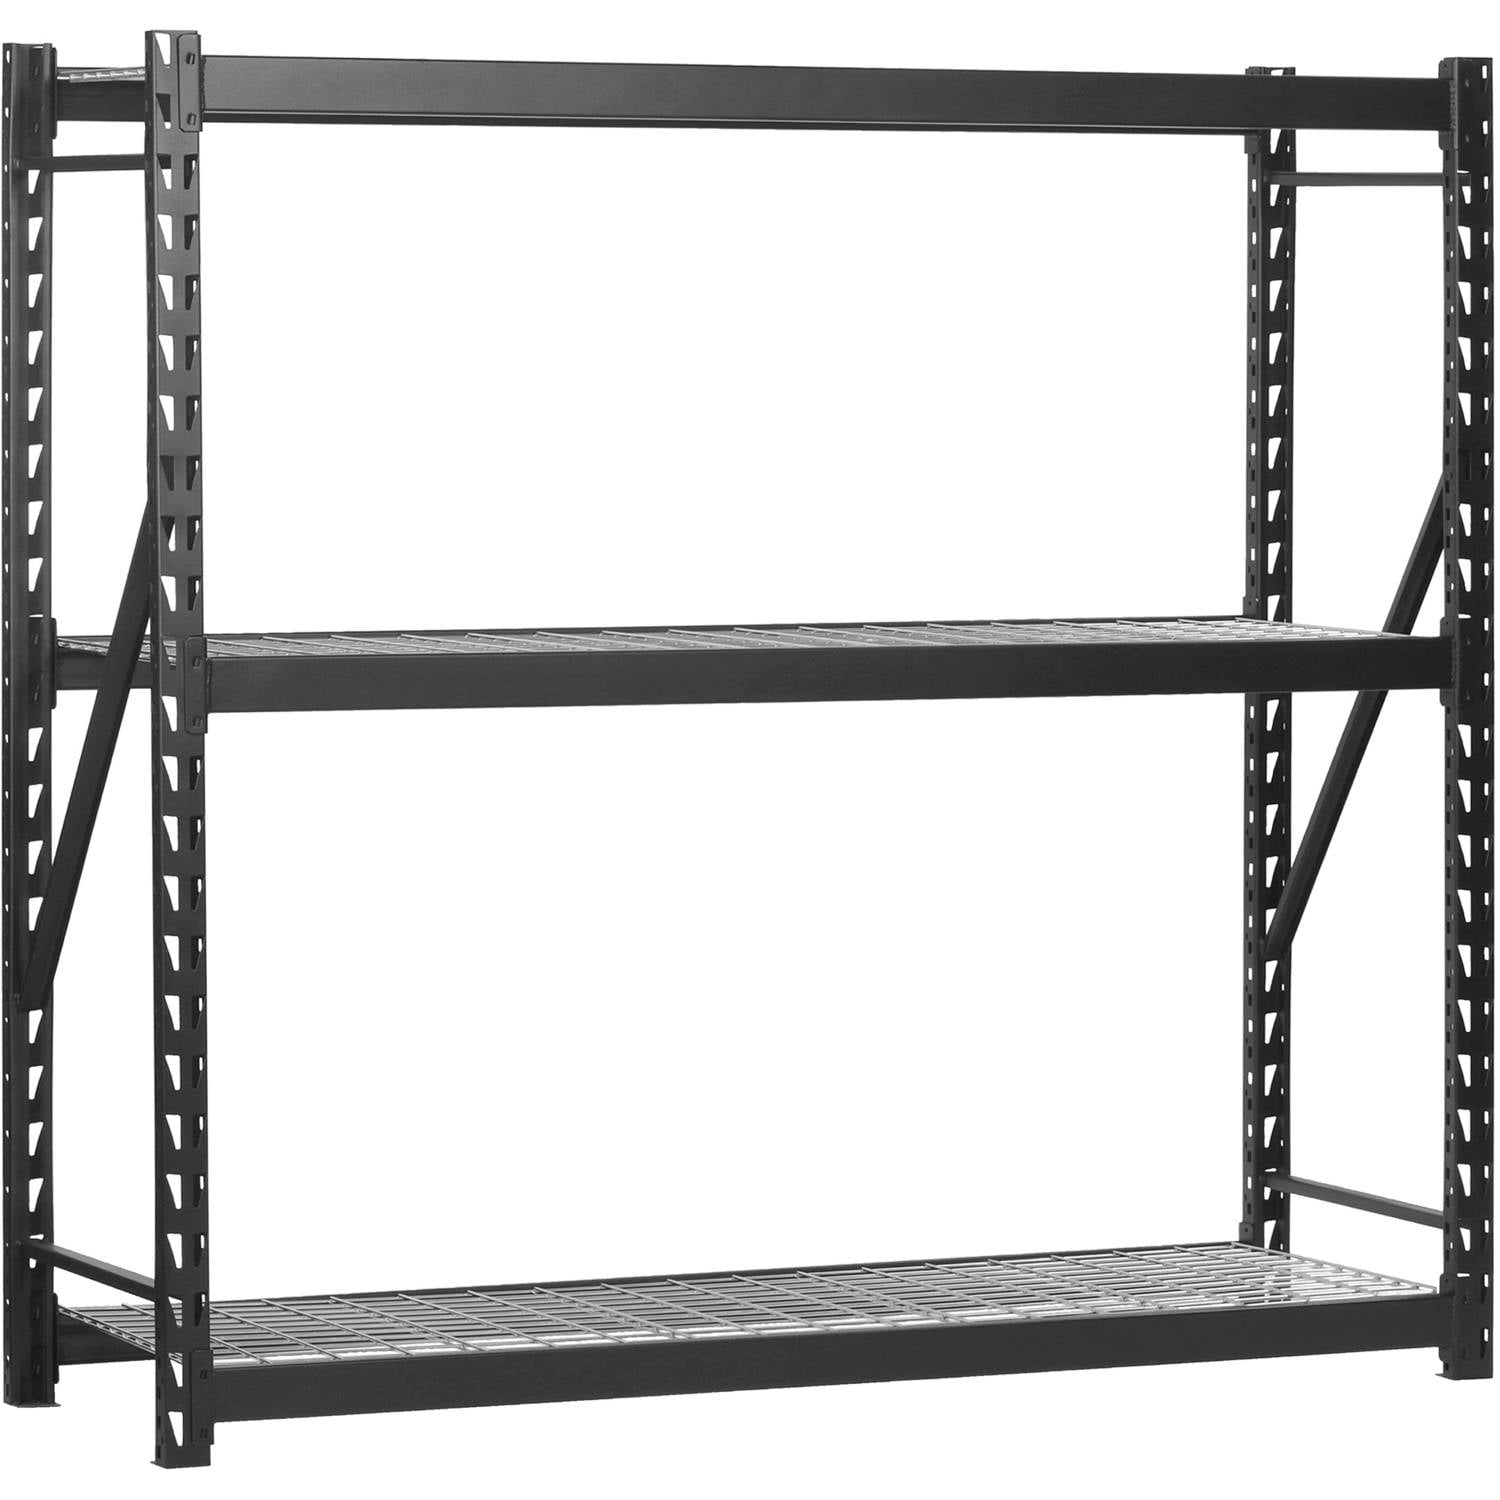 Capacity per Shelf Pack of 4 Muscle Rack ERZ772472WL3 Black Heavy Duty Steel Welded Storage Rack 3 Shelves 1,000 lb 72 Height x 77 Width x 24 Depth 